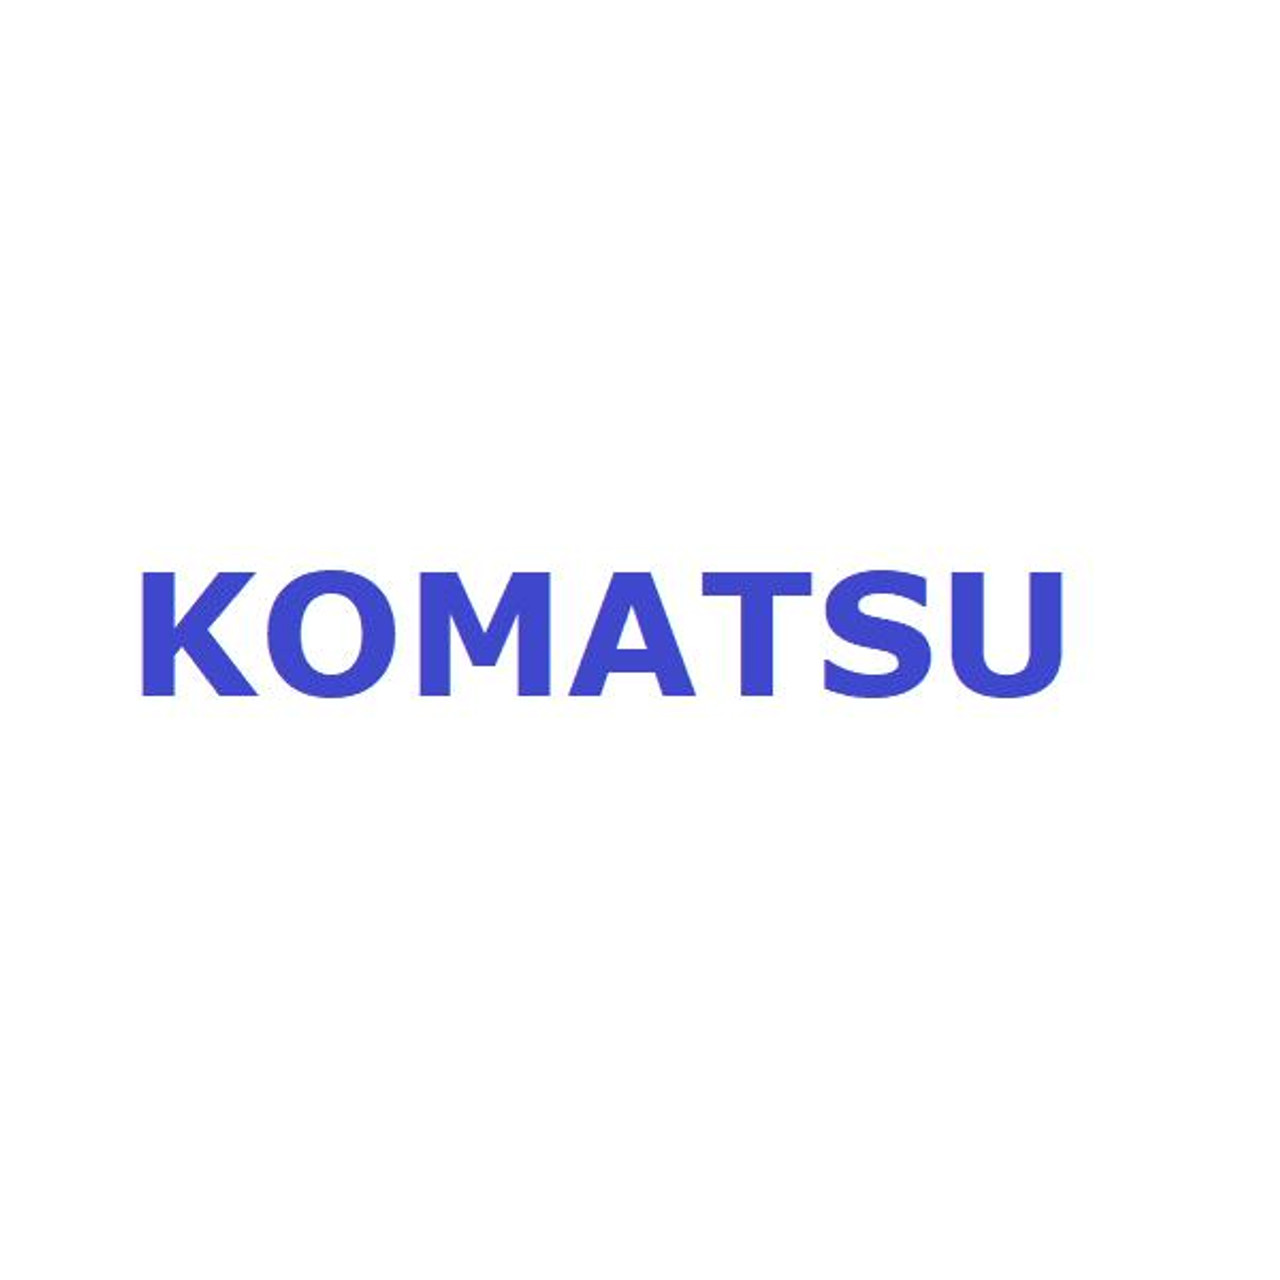 Komatsu Seal # 707-99-27780 fit Cylinder 65 x 95mm